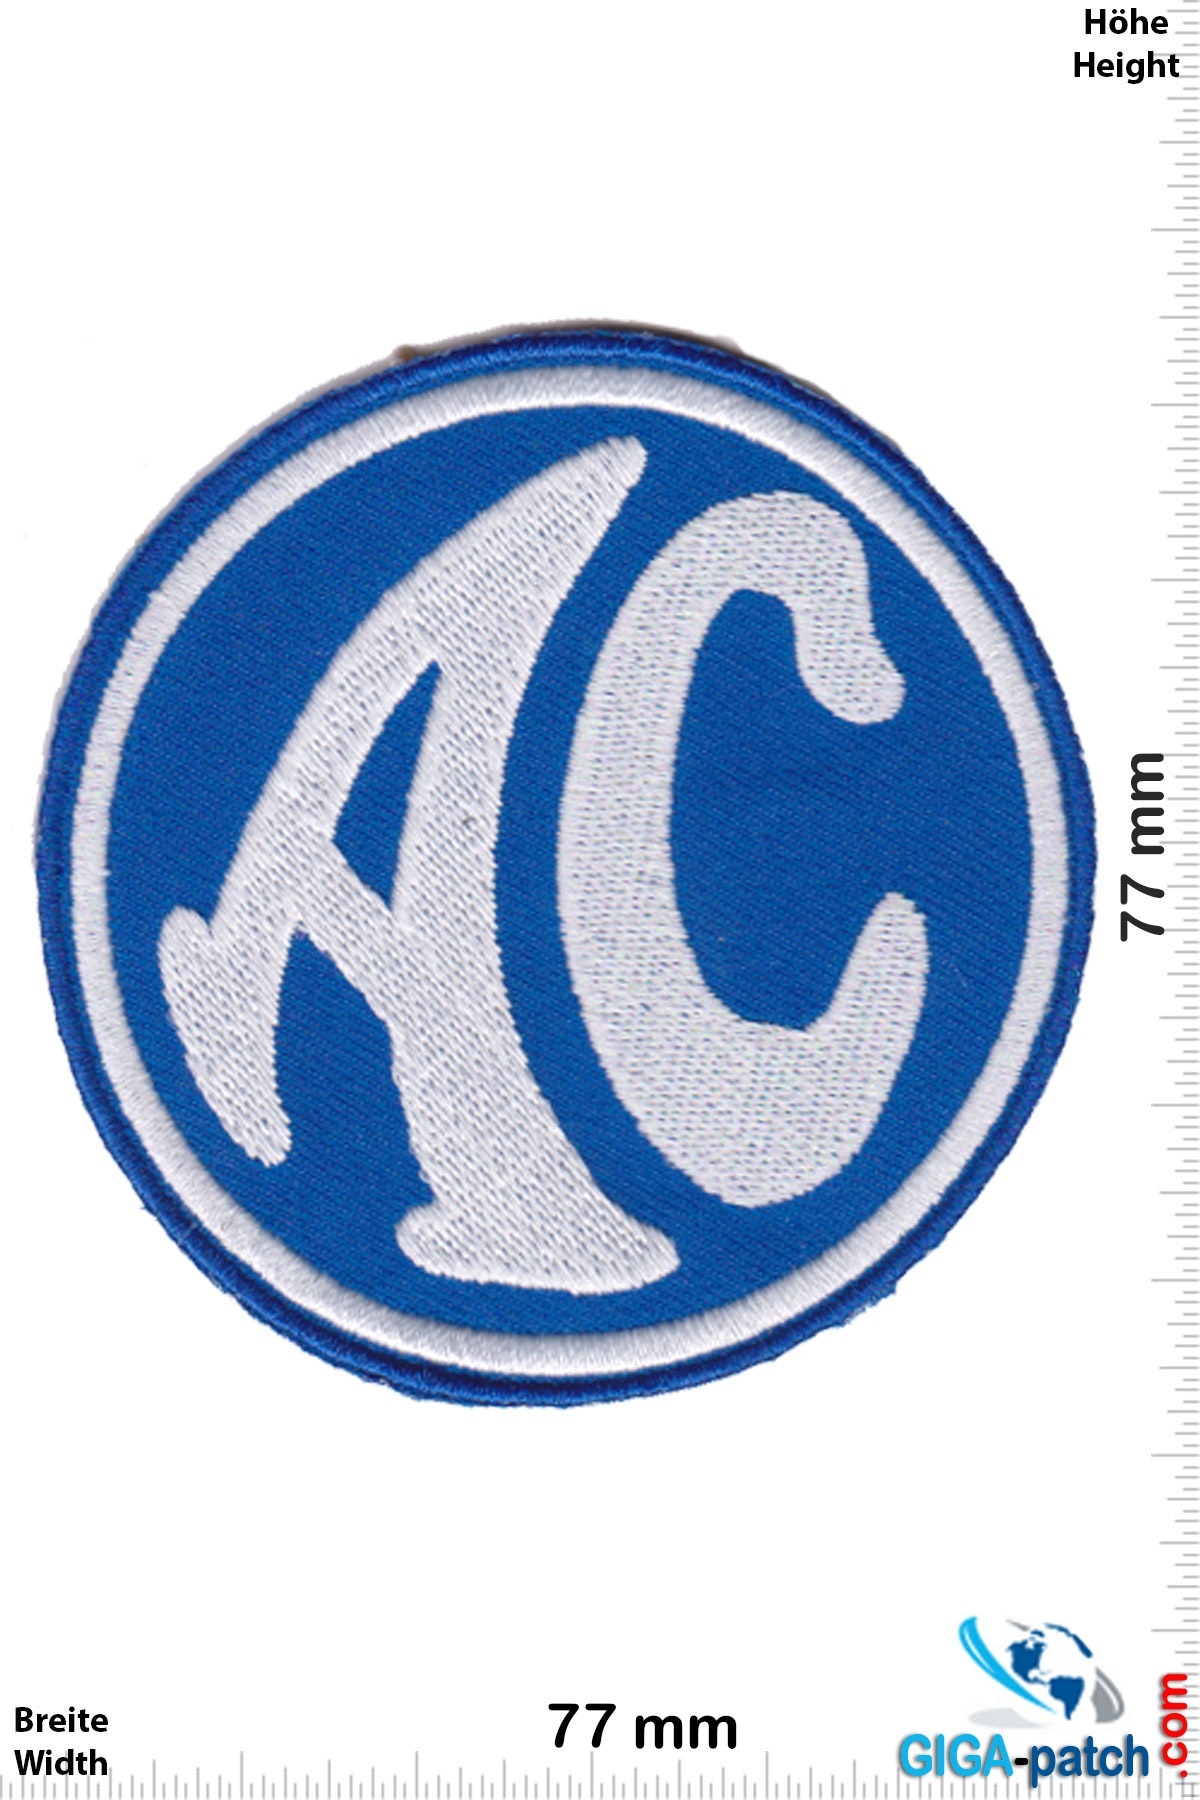 AC - AC Cars - Motorcars- Patch- Aufnäher - Aufnäher Shop / Patch